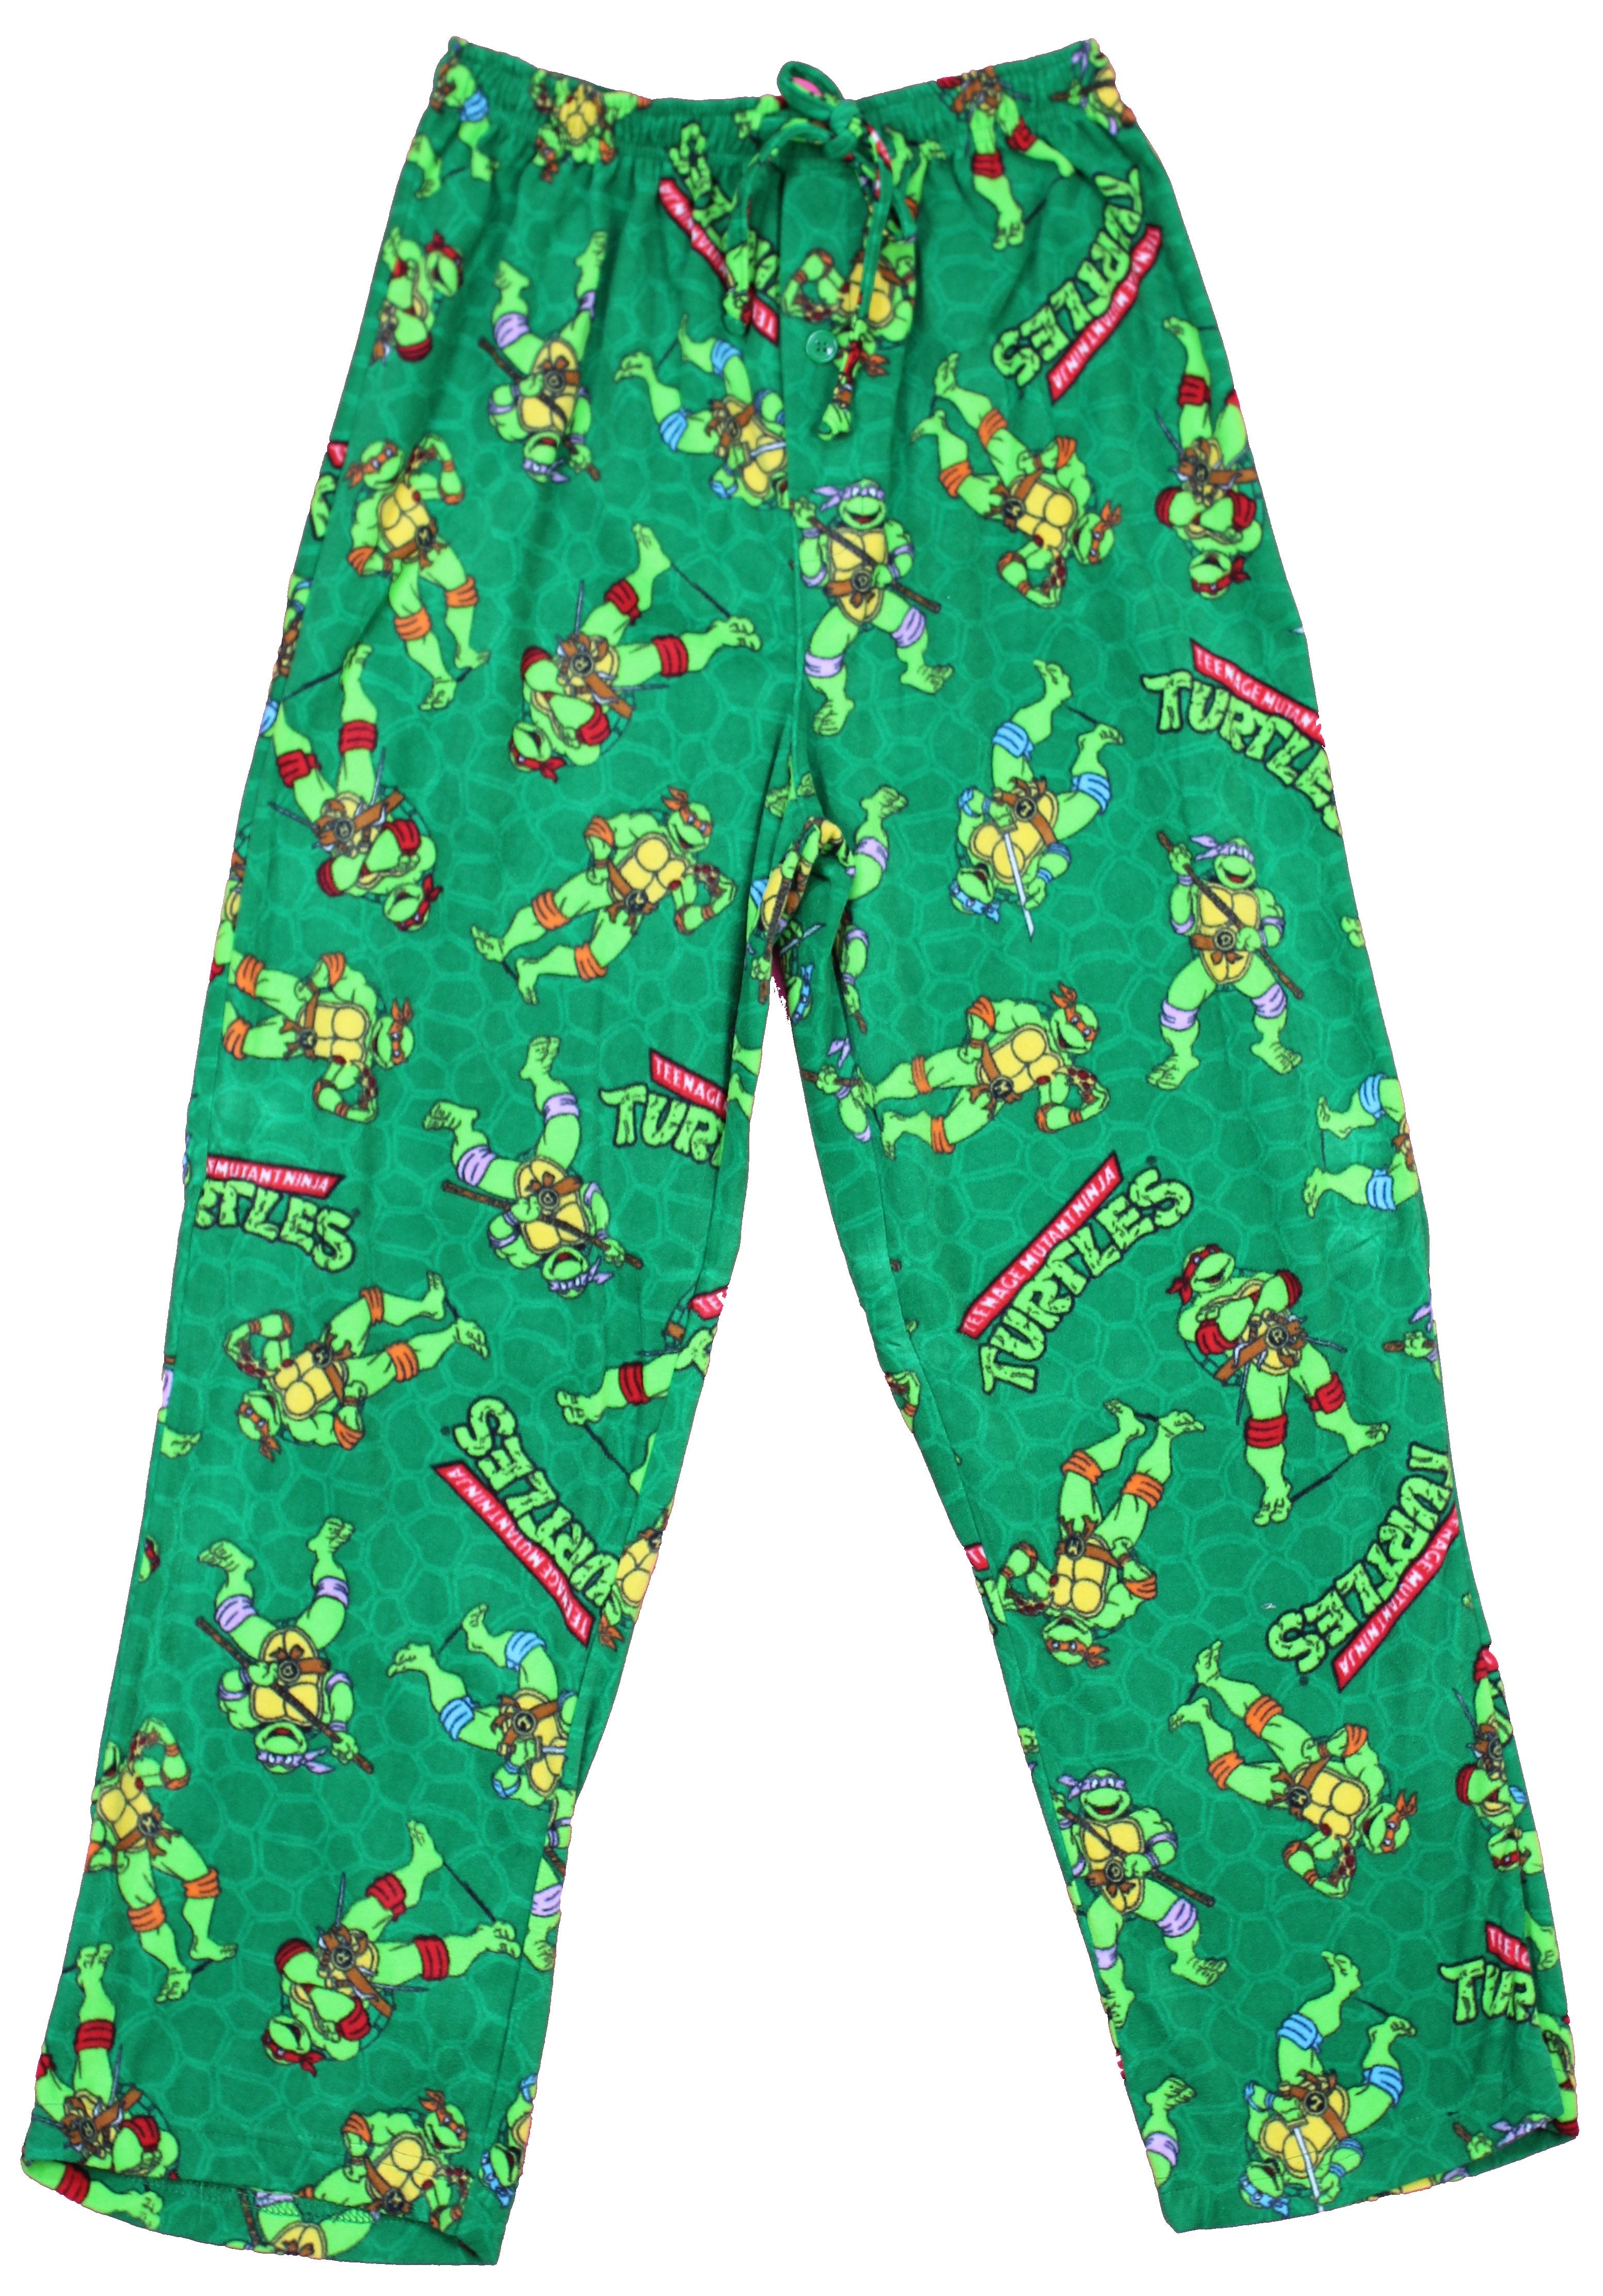 Teenage Mutant Ninja Turtles Mens Lounge Pants TMNT Green Pjs Trousers